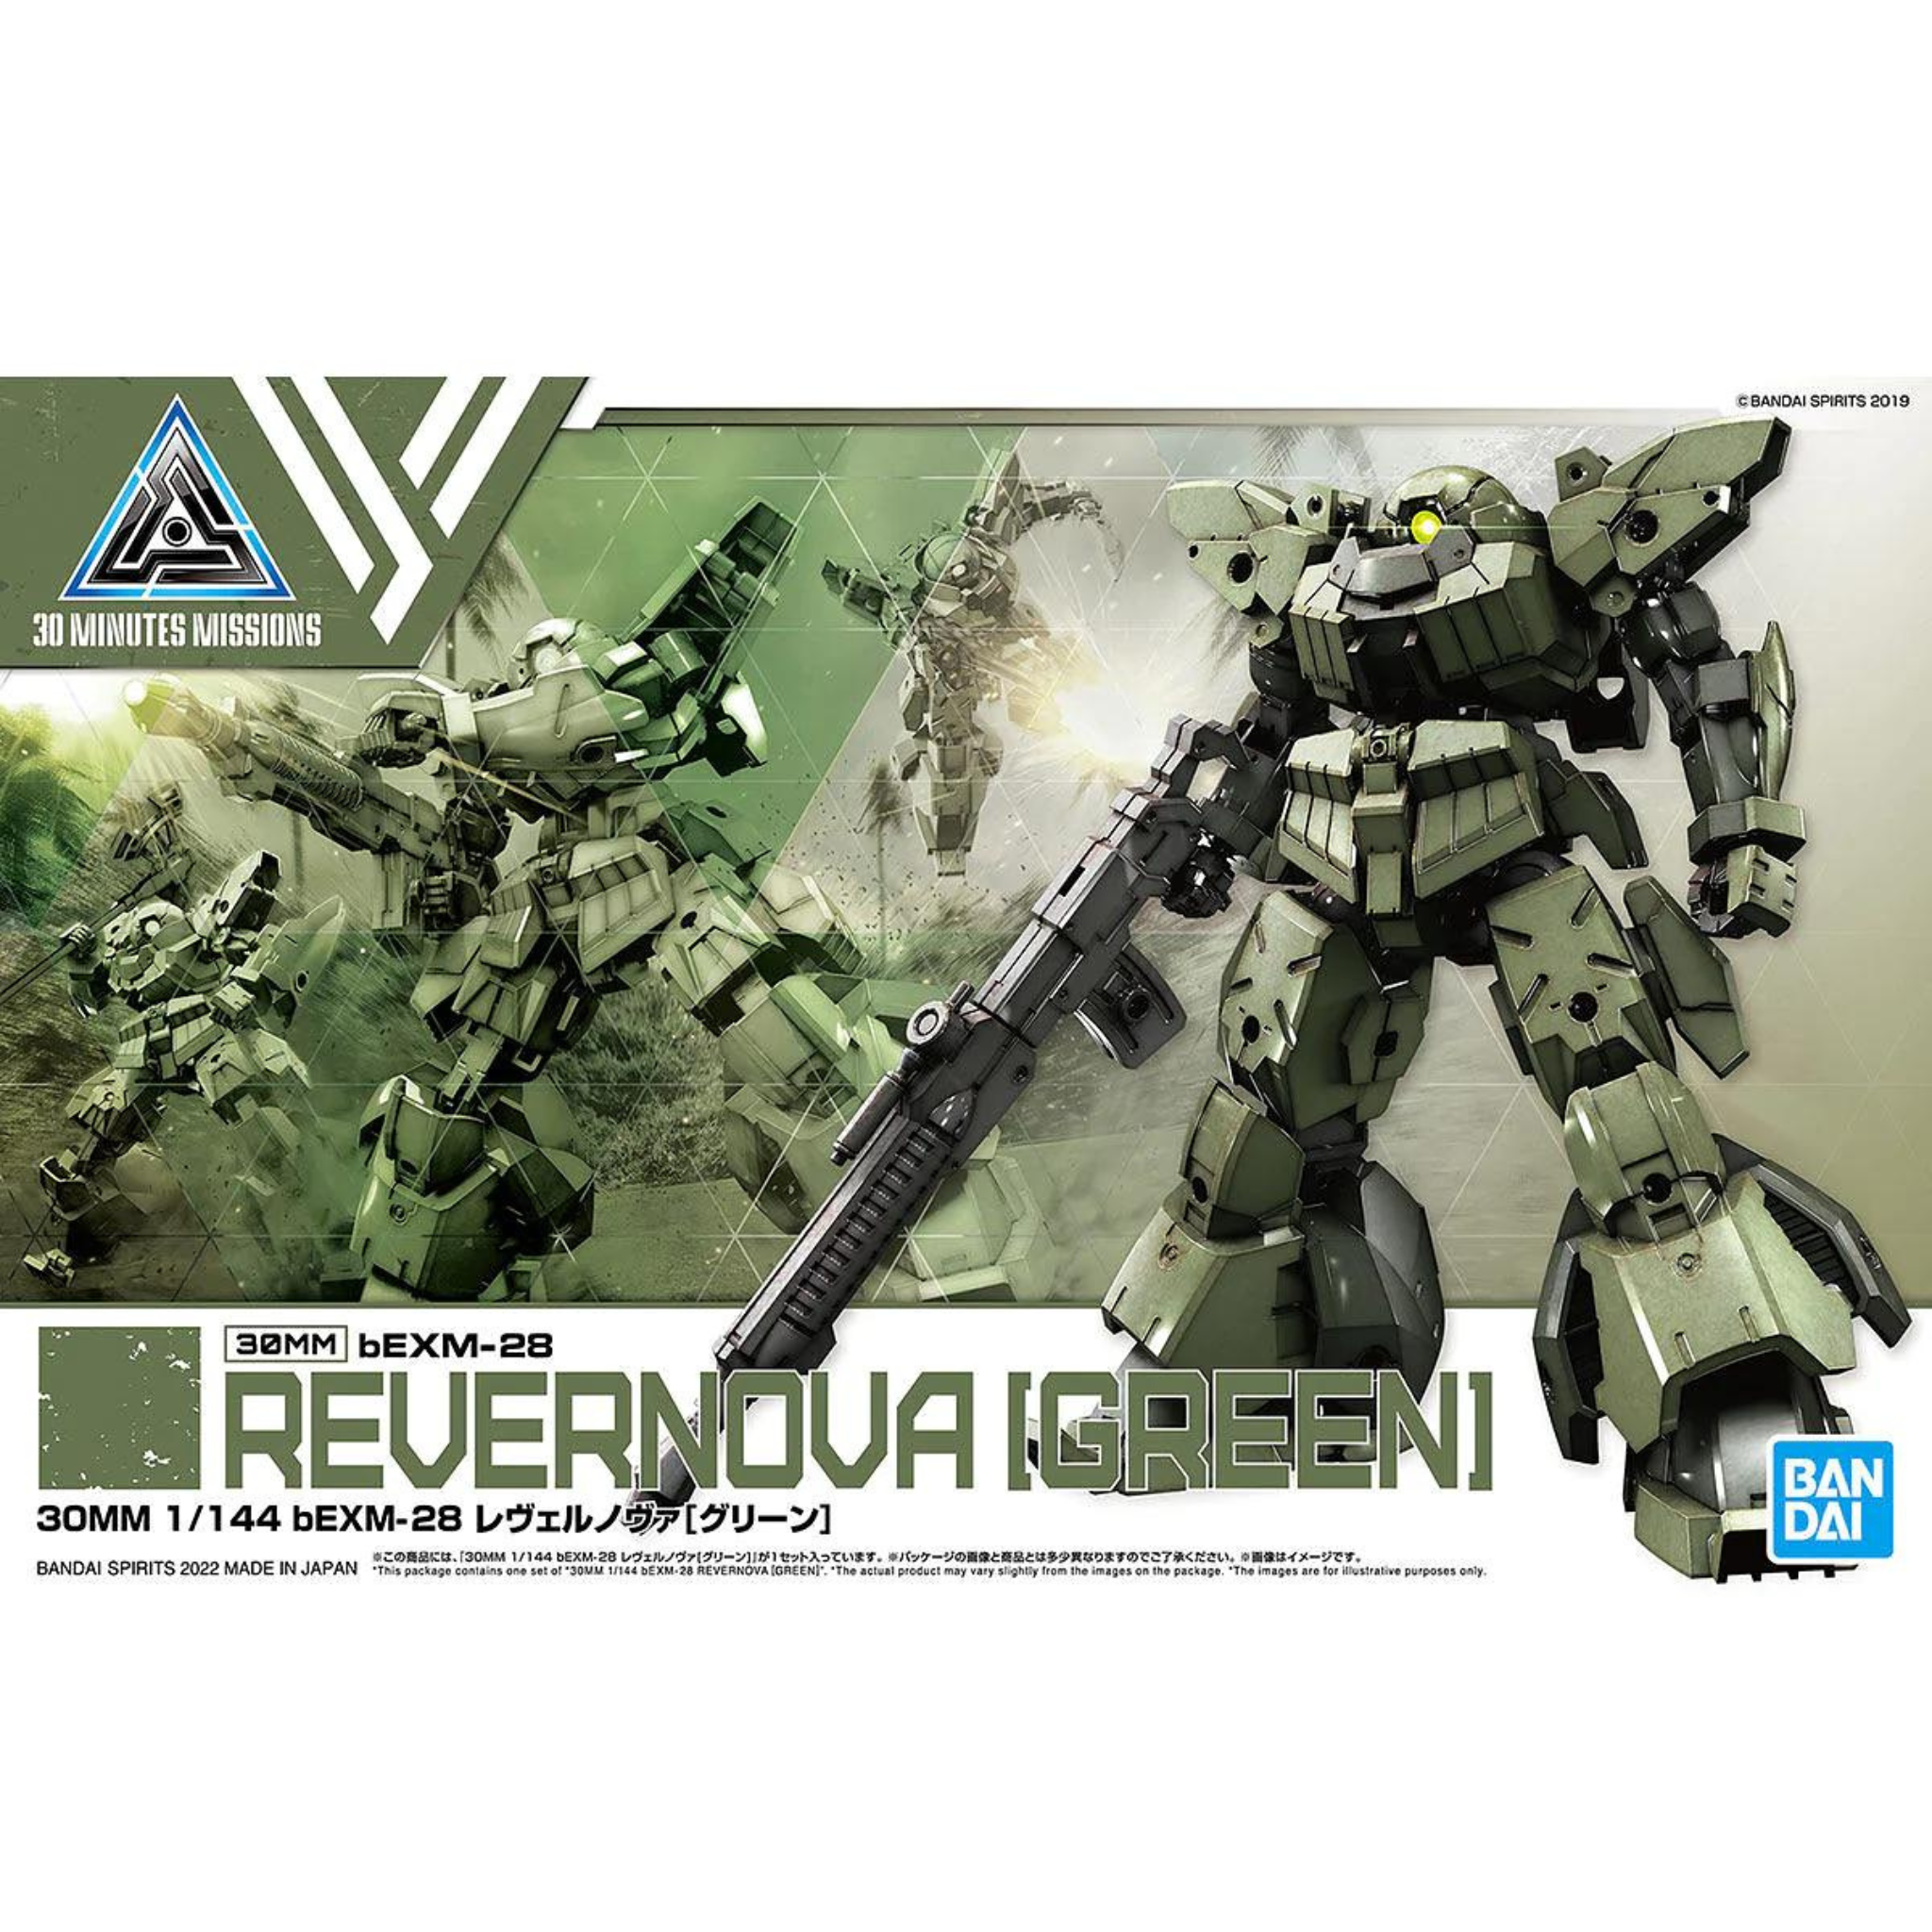 Revernova 1/144 Green 30 Minutes Missions Model Kit #5063385 by Bandai